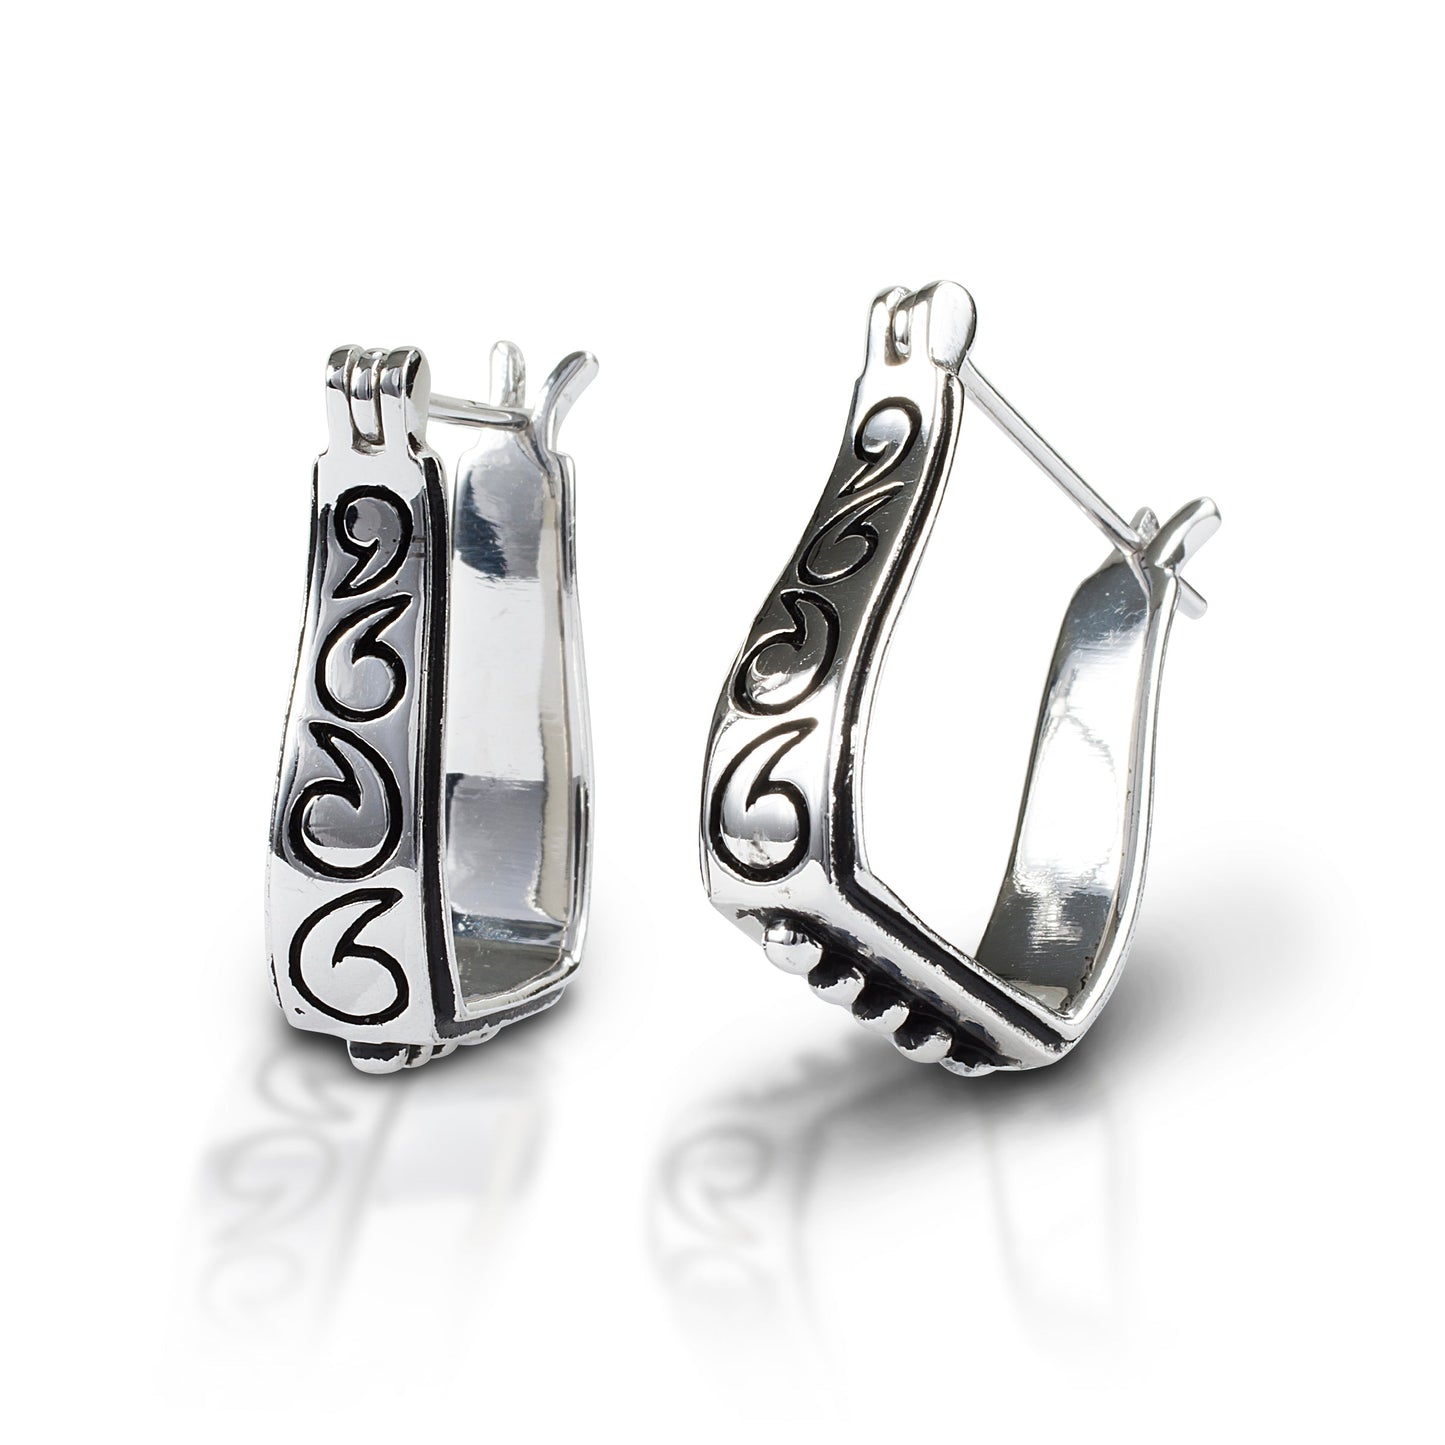 Silver Kelly Herd horseshoe earrings with intricate scroll designs.